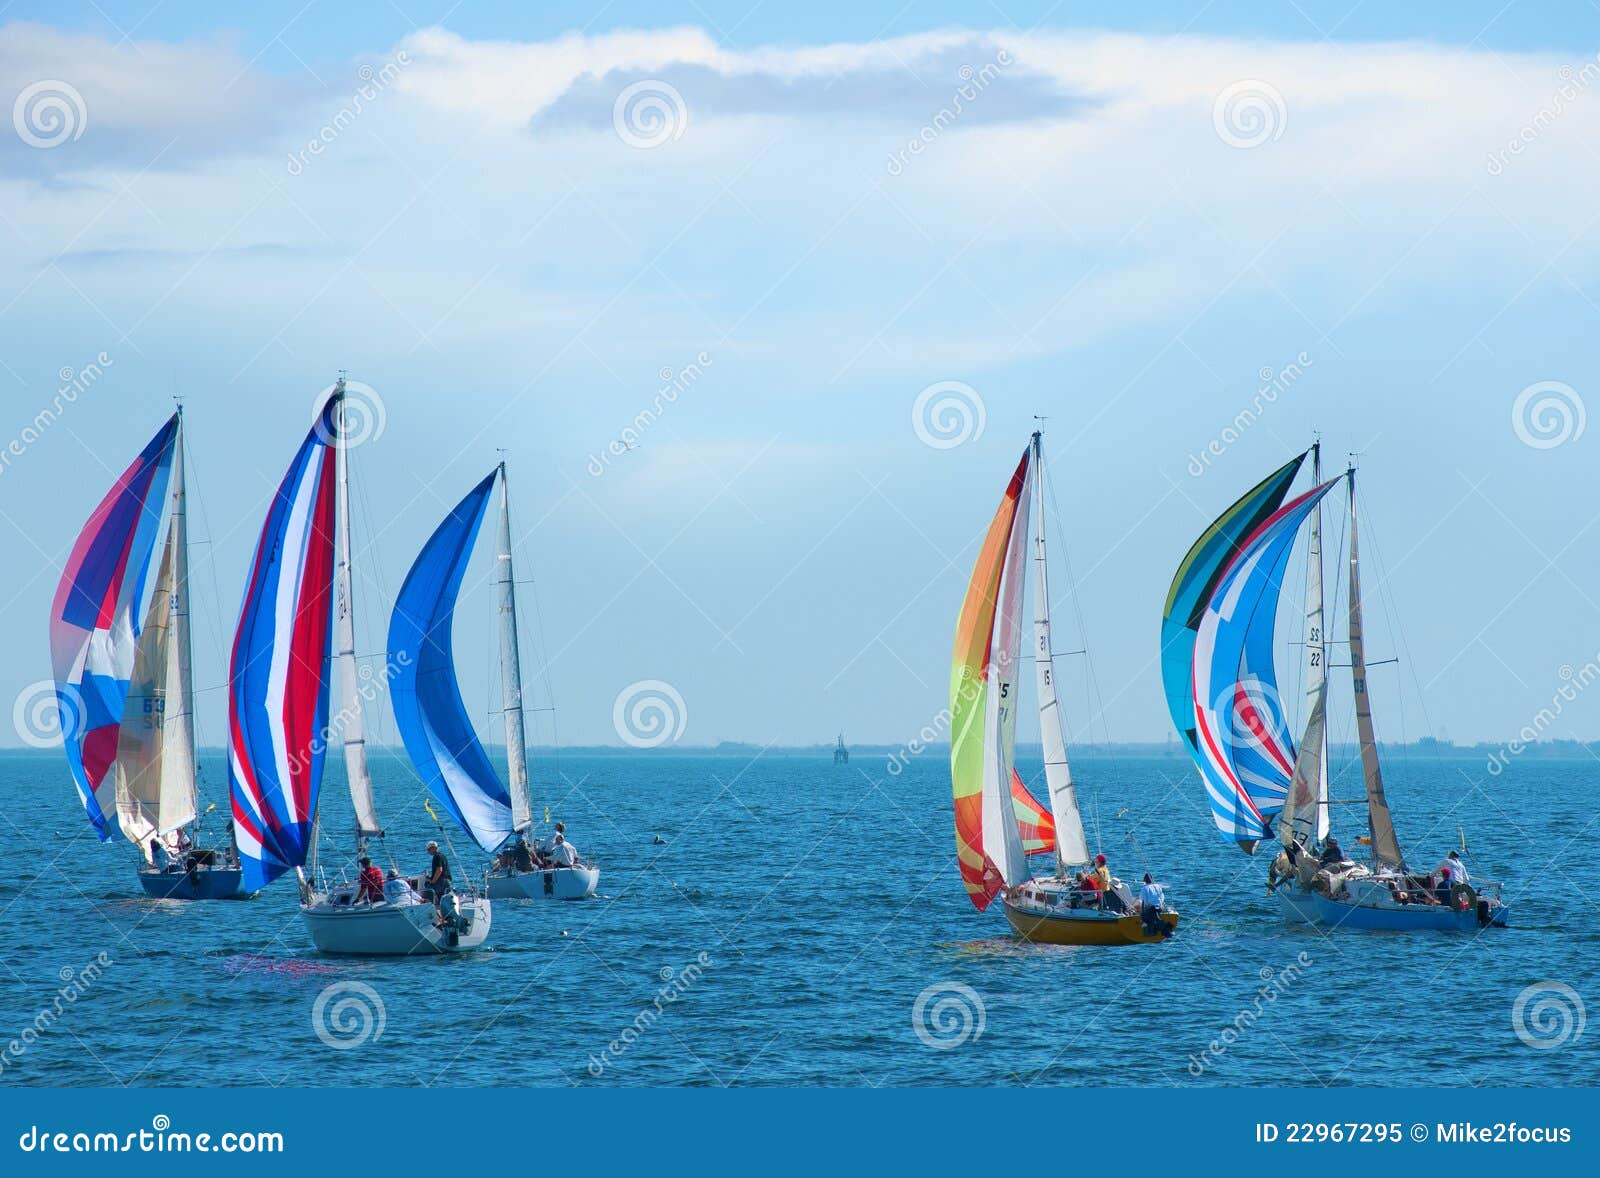 sails vela sailboats spinnaker zeilboot regatta barca voiles gennaker barco bunten segeln zeilen variopinte vele coloridas seglar färgrika raza colorées